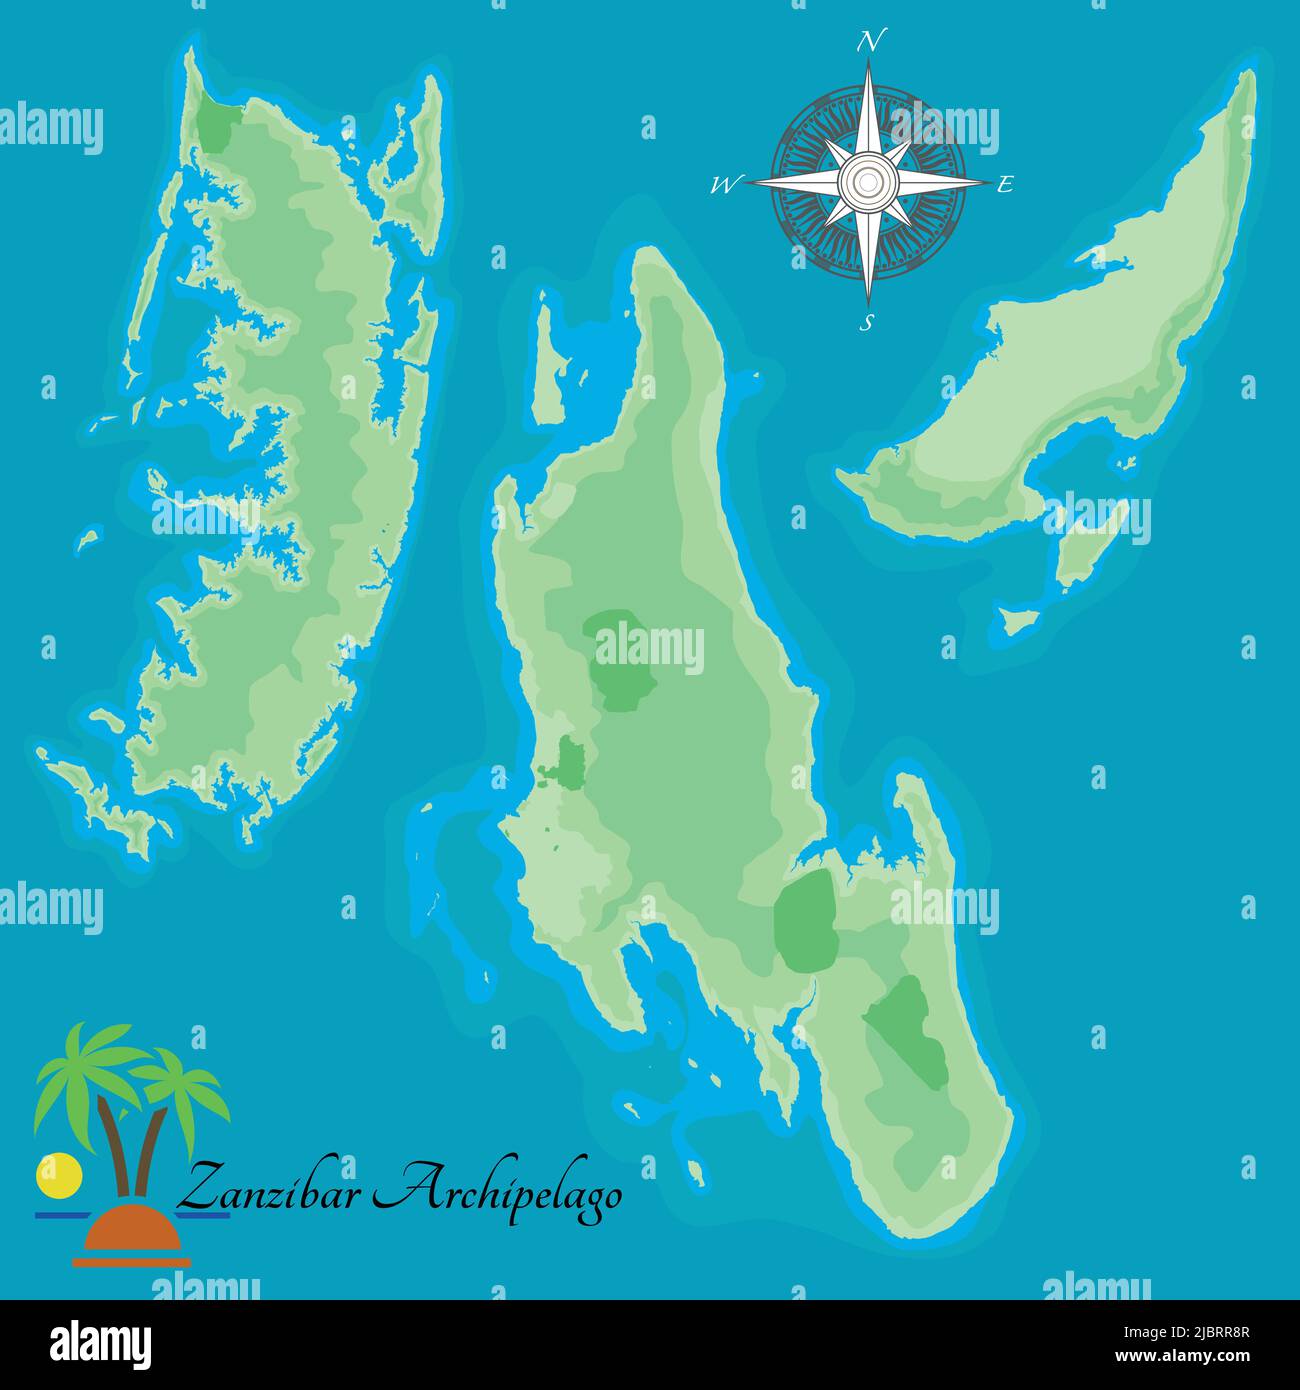 Zanzibar Archipelago. Realistic illustration of islands Unguja Island, Pemba Island, Mafia Island, semi-autonomous region of Tanzania. Stock Vector